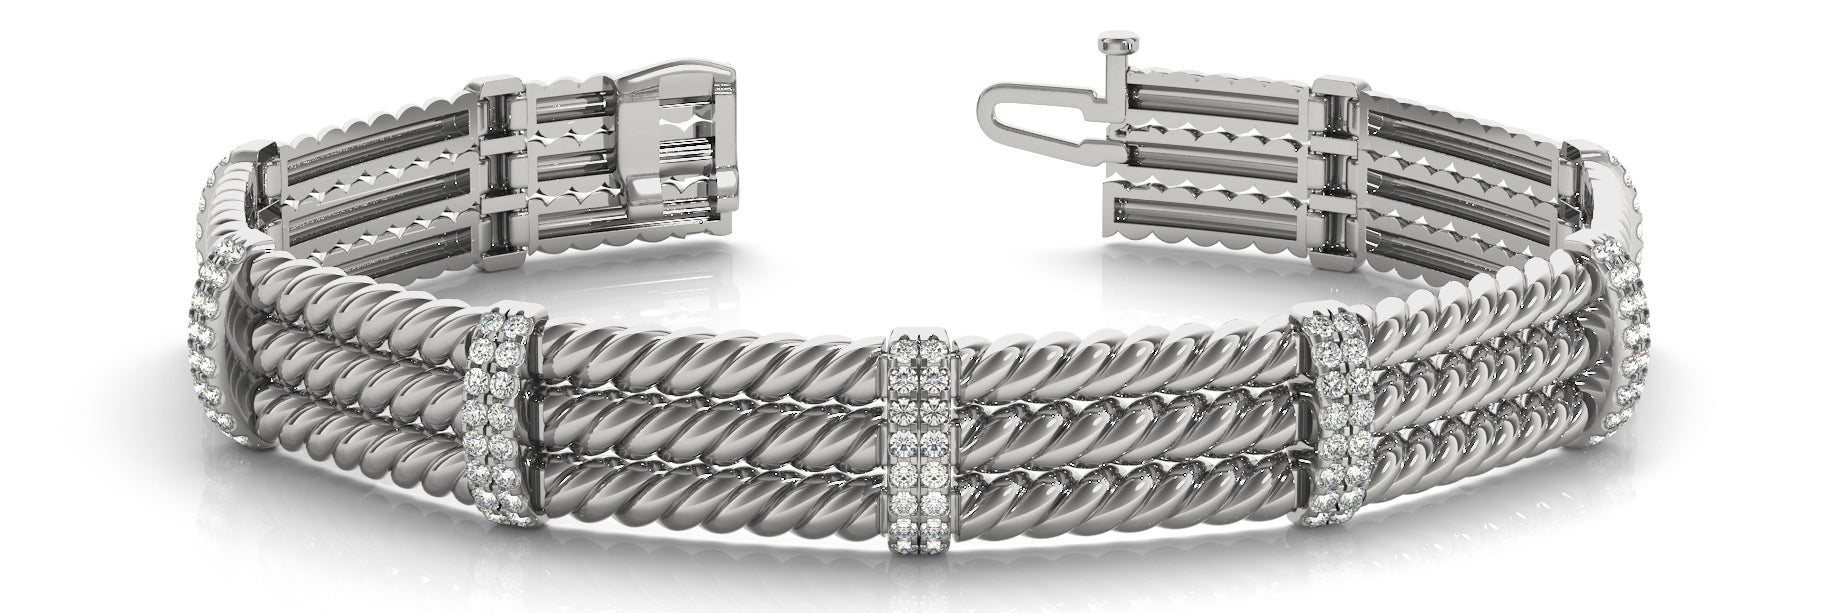 Fancy Diamond Bracelet Ladies 1.64ct tw - 14kt Gold